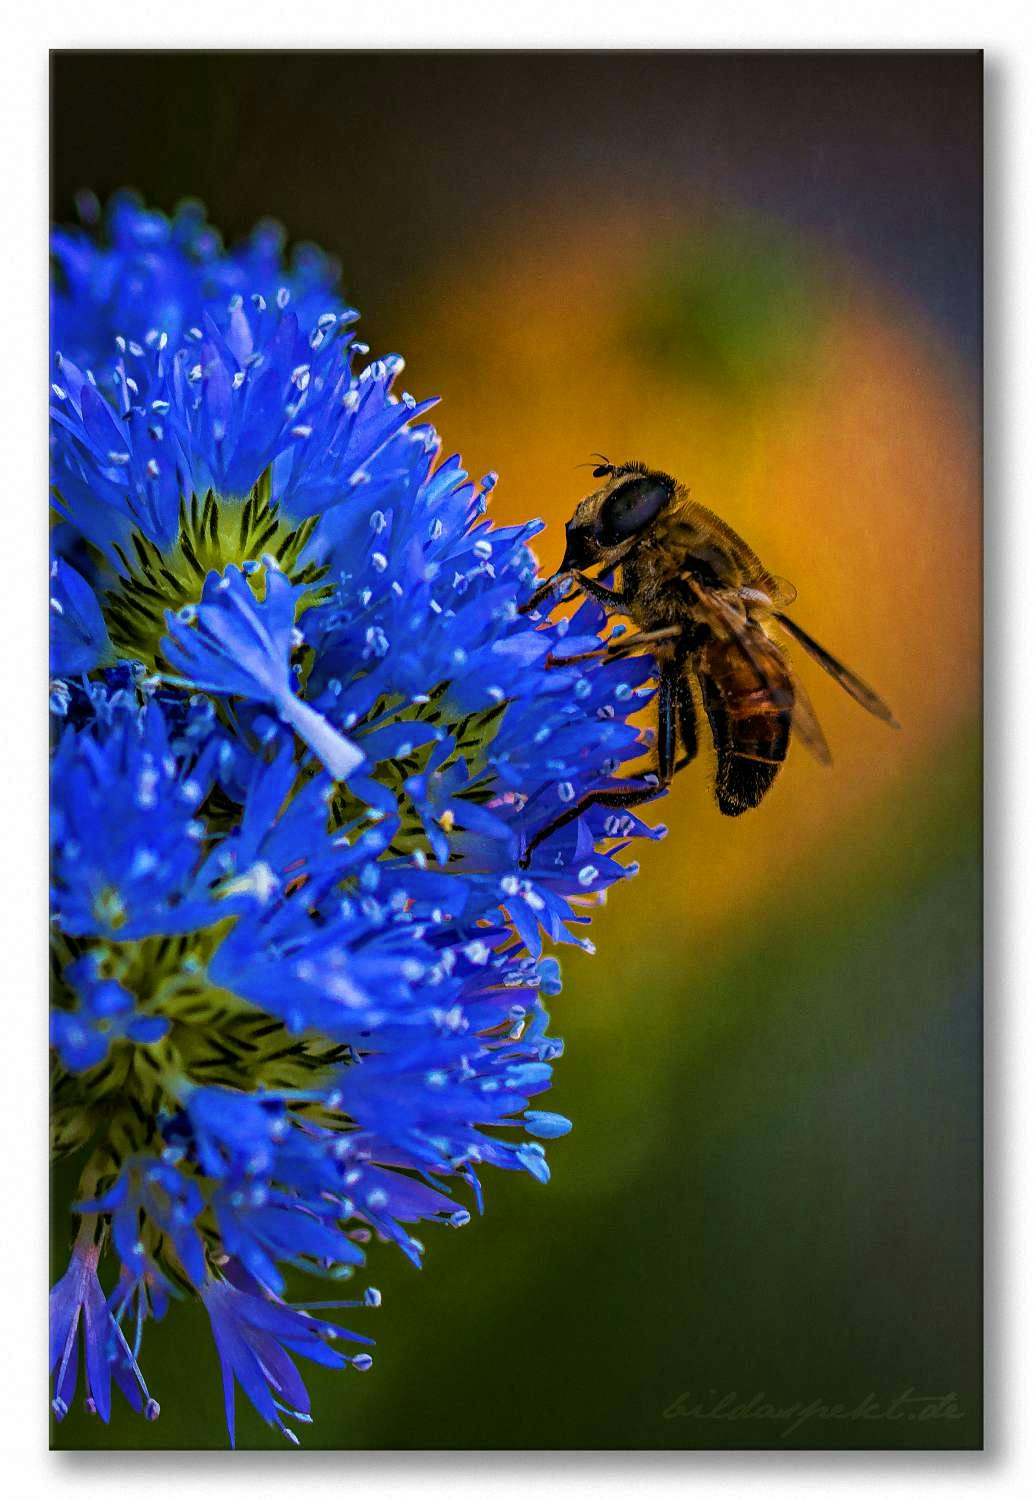 Fleißiges Bienchen  ~~  Busy Little Bee